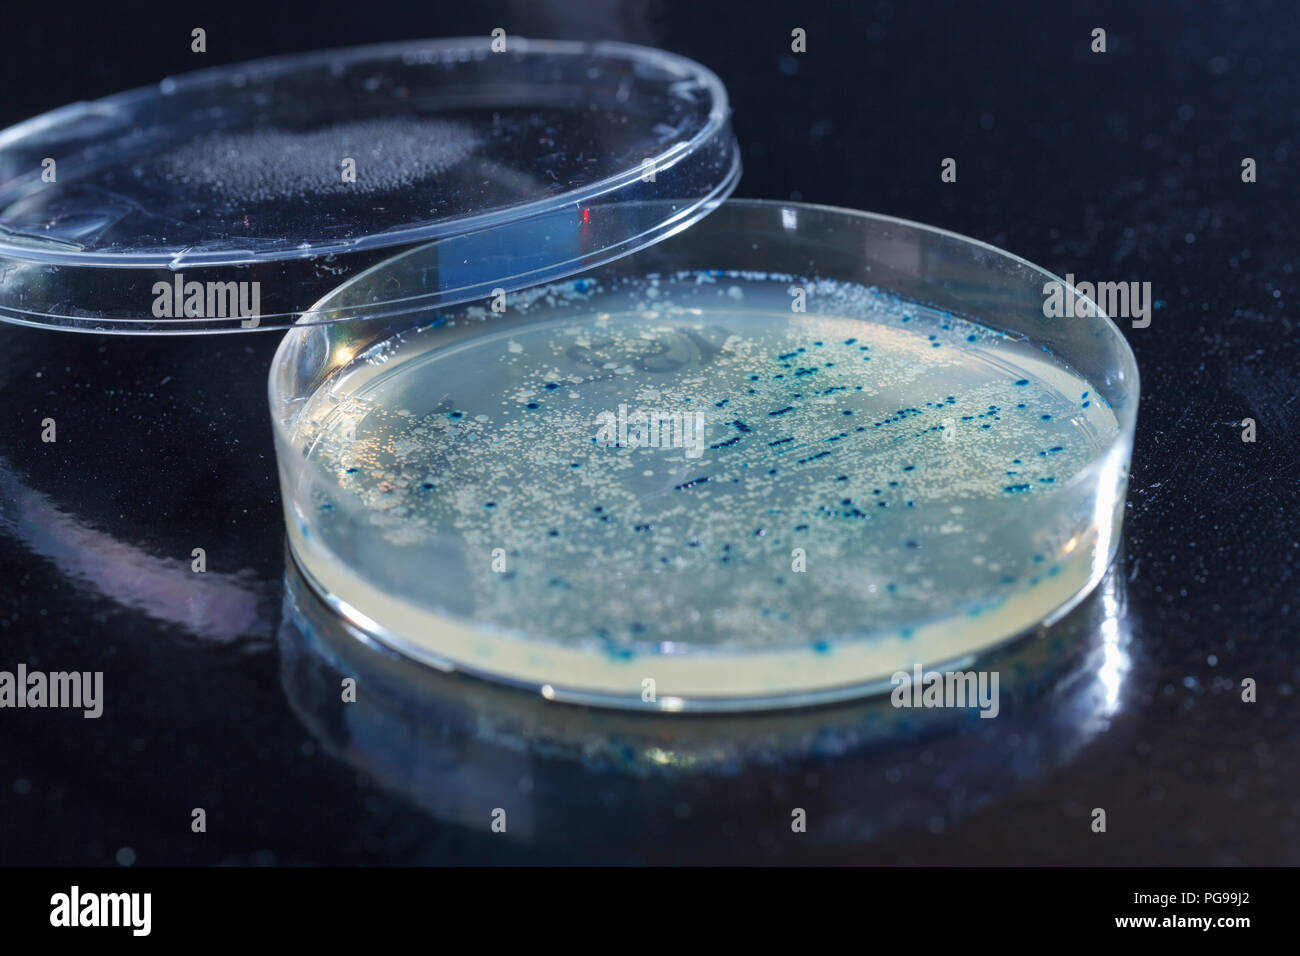 Colonies growing in Petri dish. Stock Photo